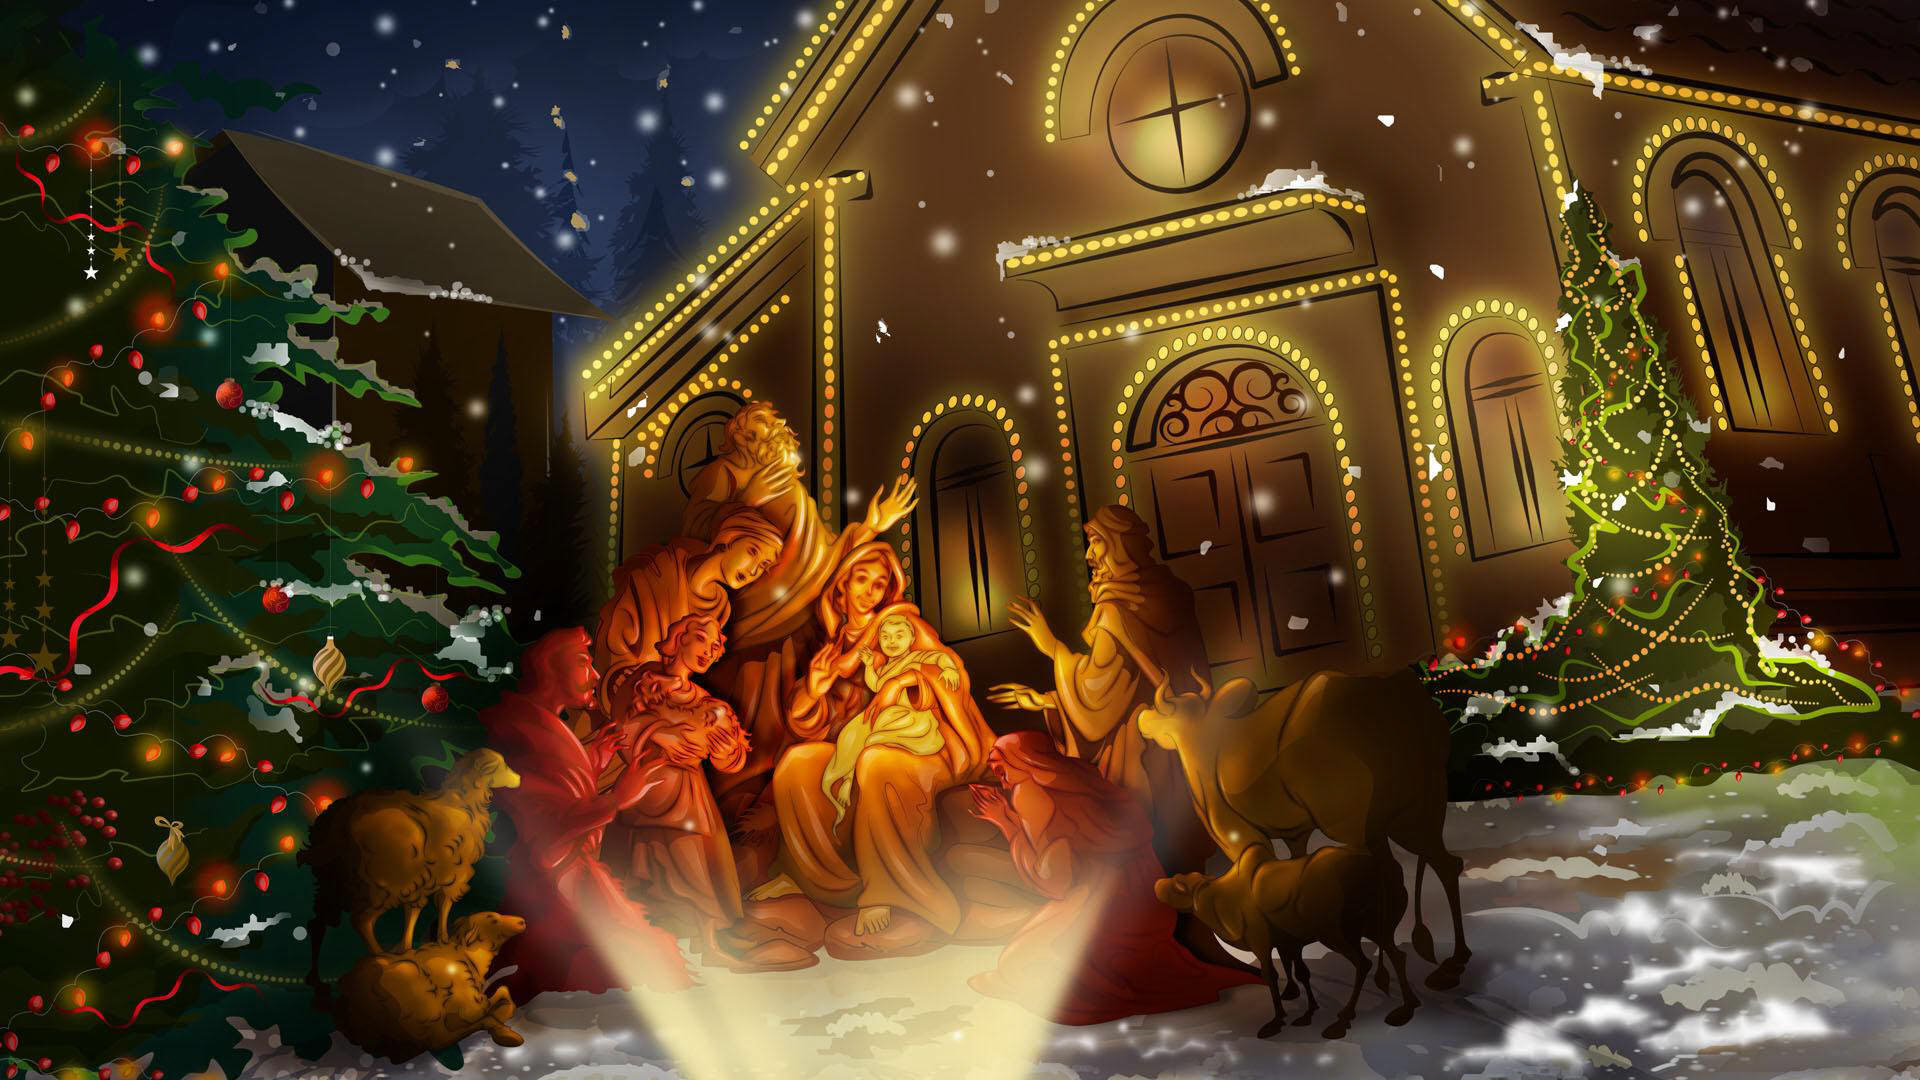 Nativity Scene wallpaper by nini4ever  Download on ZEDGE  400d